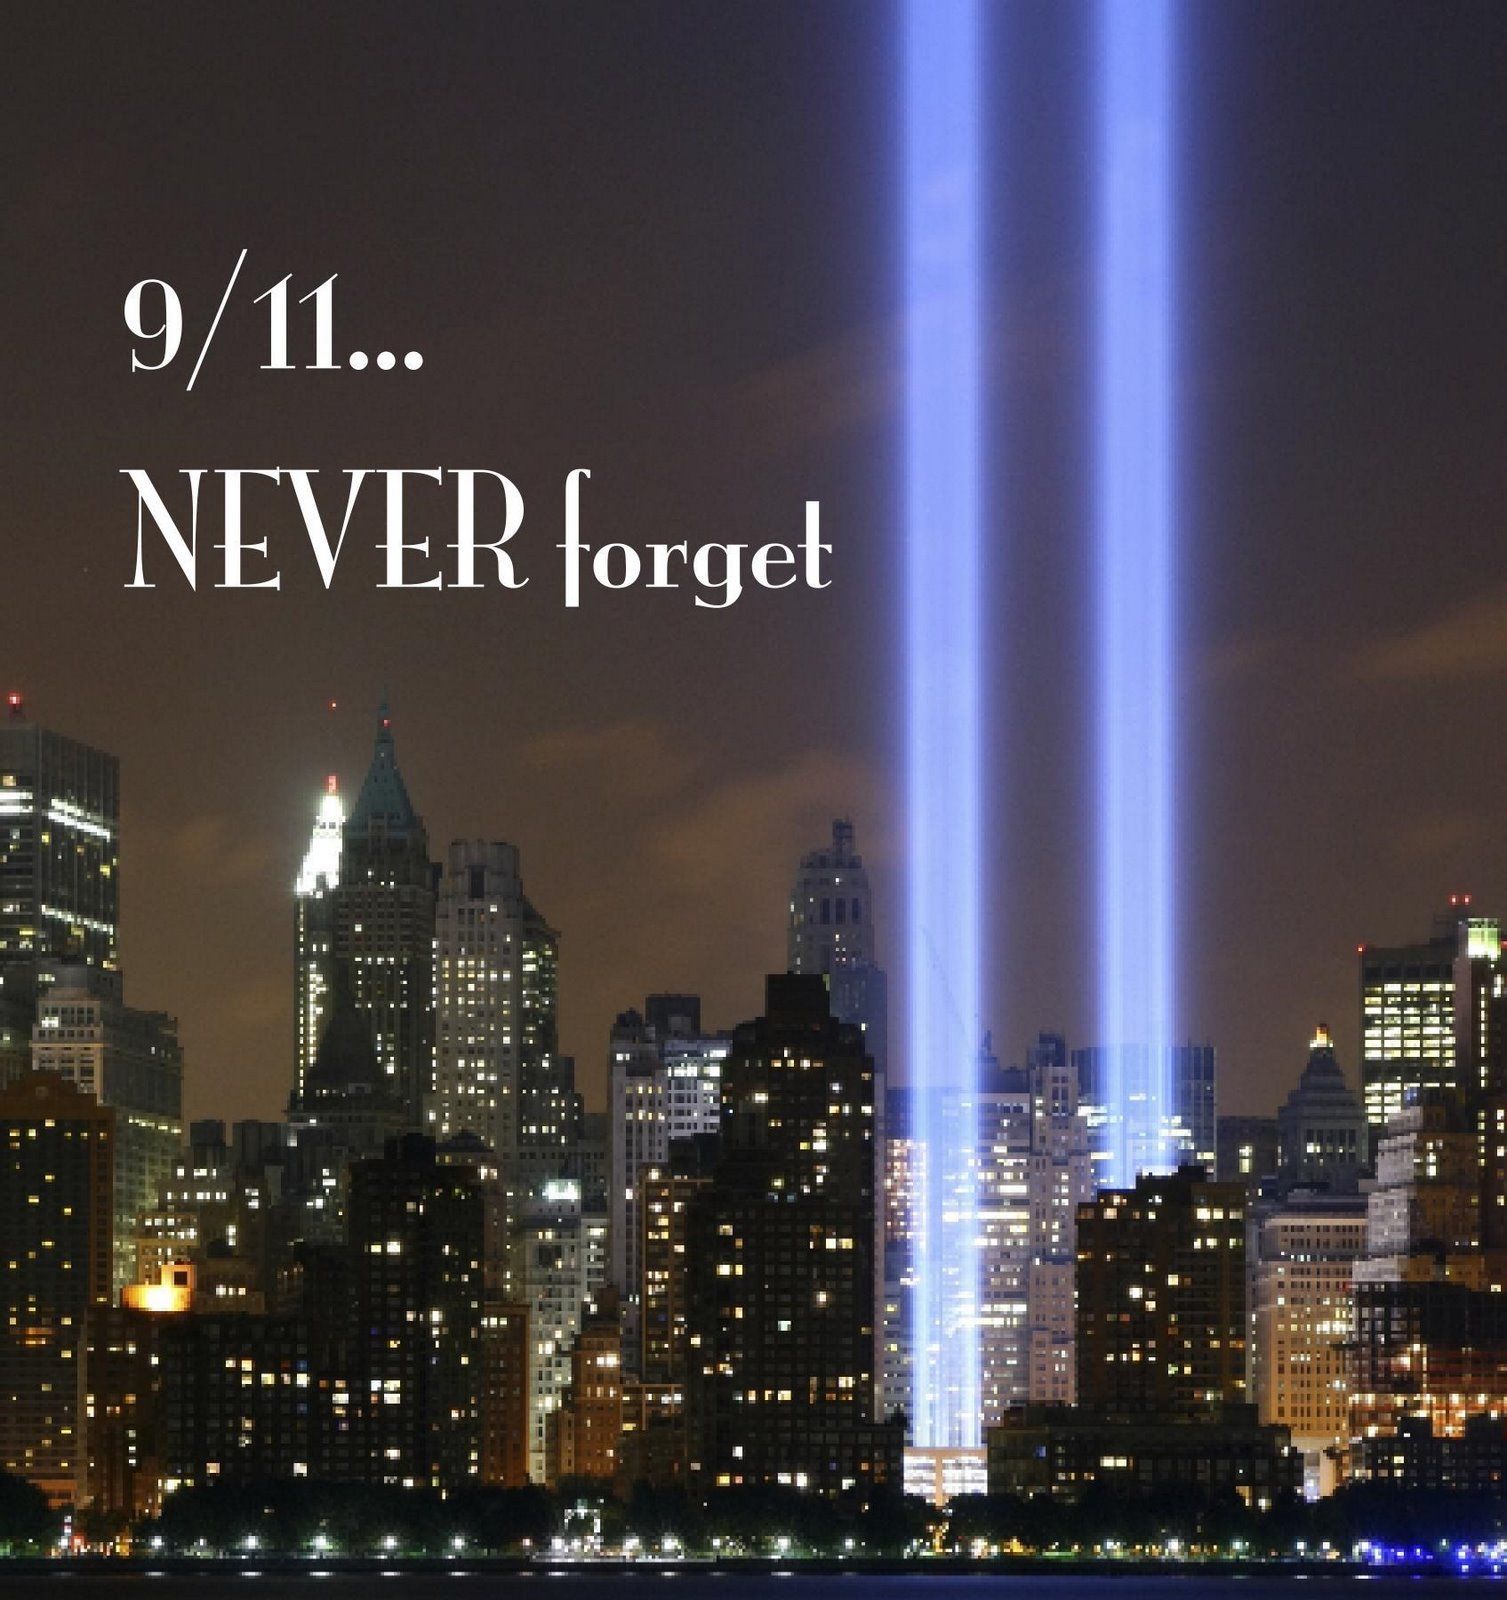 20th Anniverary of 9/11